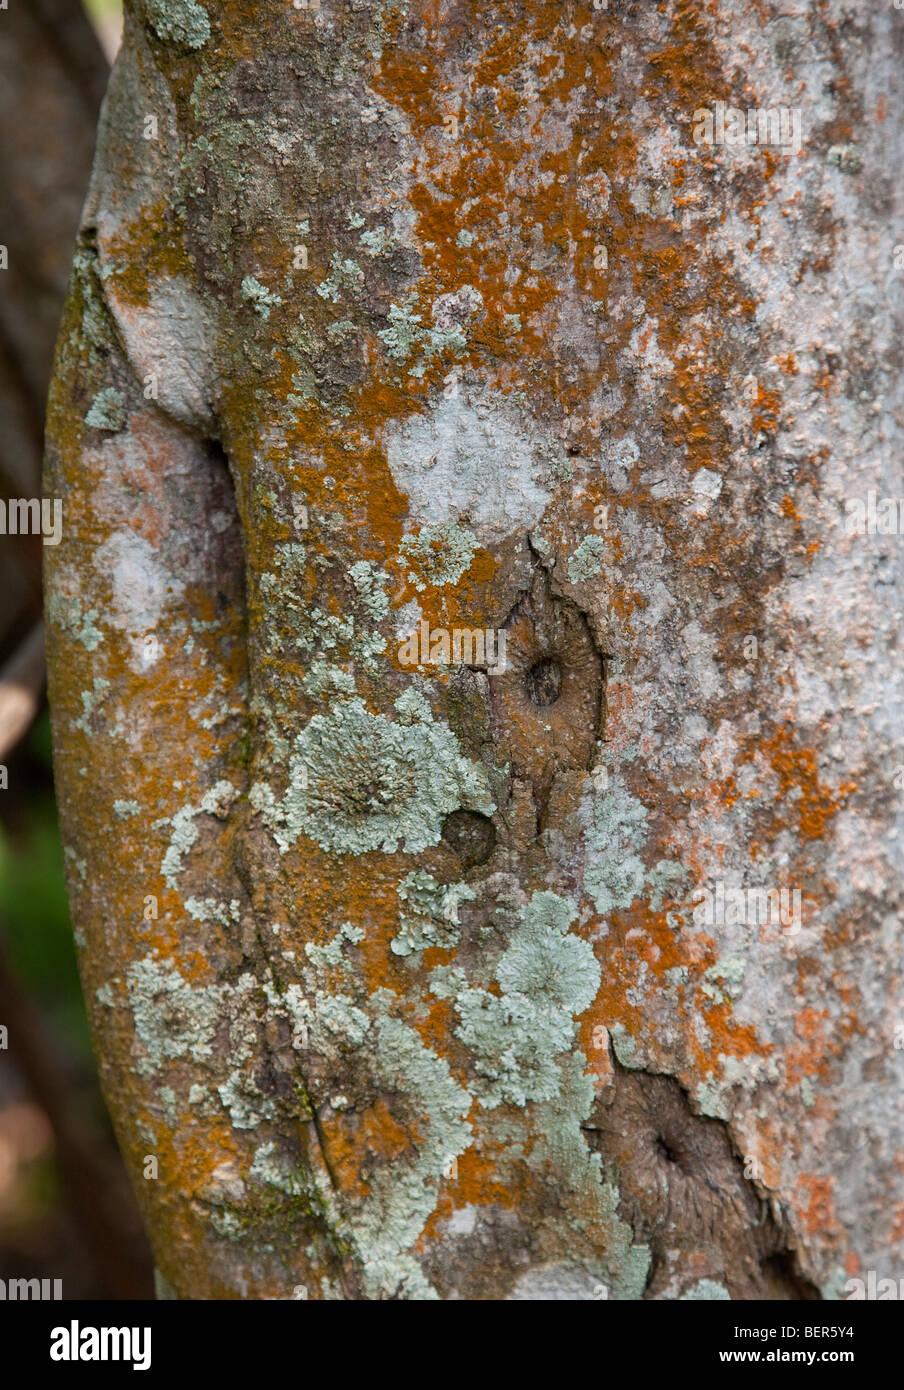 Tropical lichens growing on tree bark, Malaysia Stock Photo